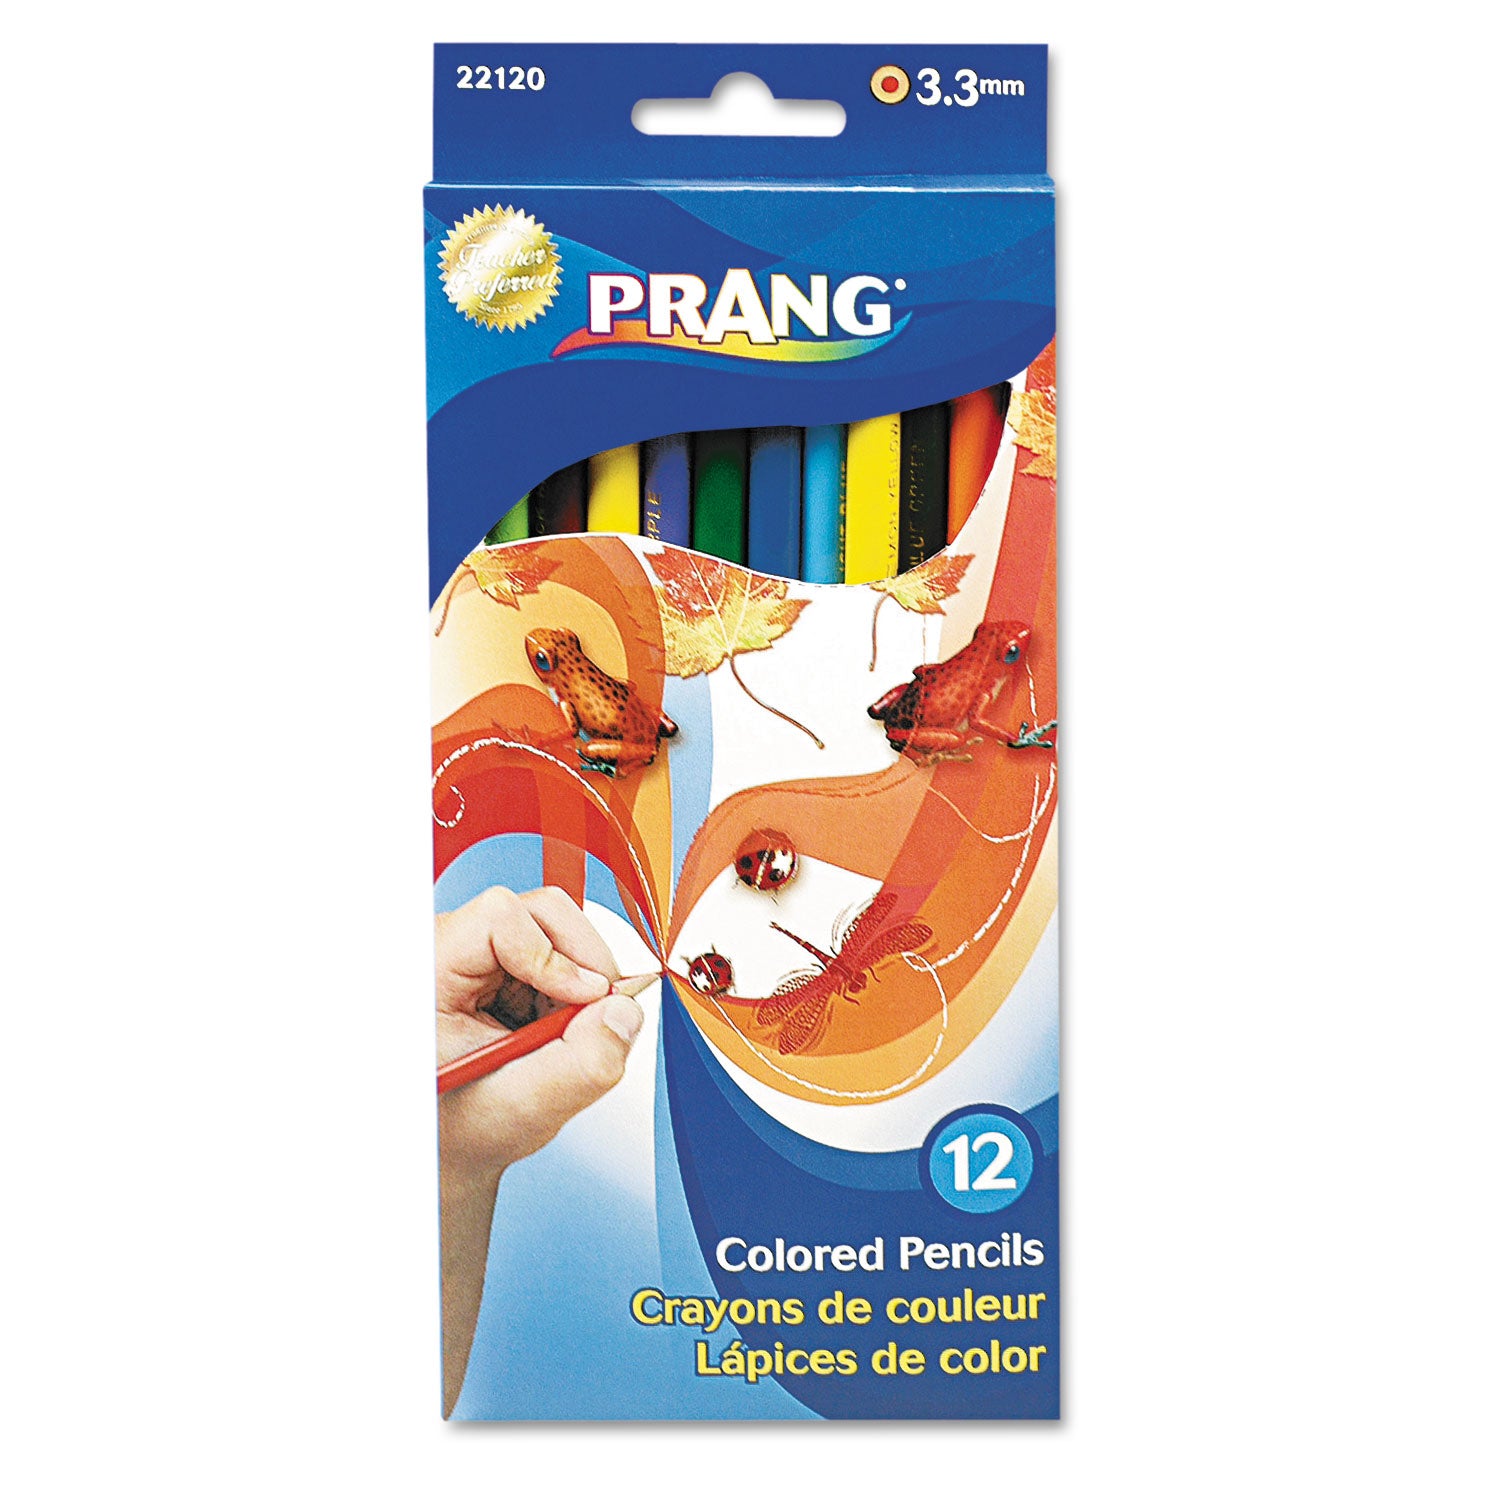 Colored Pencil Sets, 3.3 mm, 2B, Assorted Lead and Barrel Colors, Dozen - 